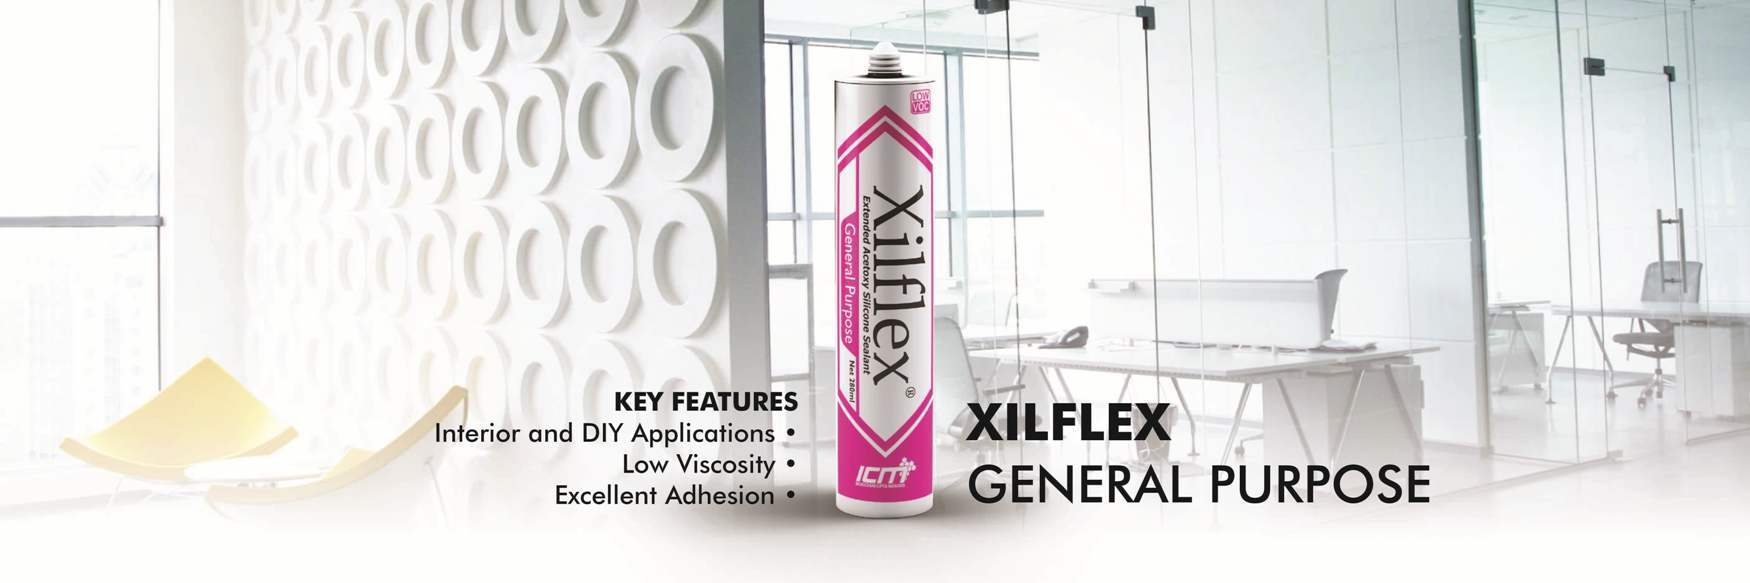 XILFLEX General Purpose